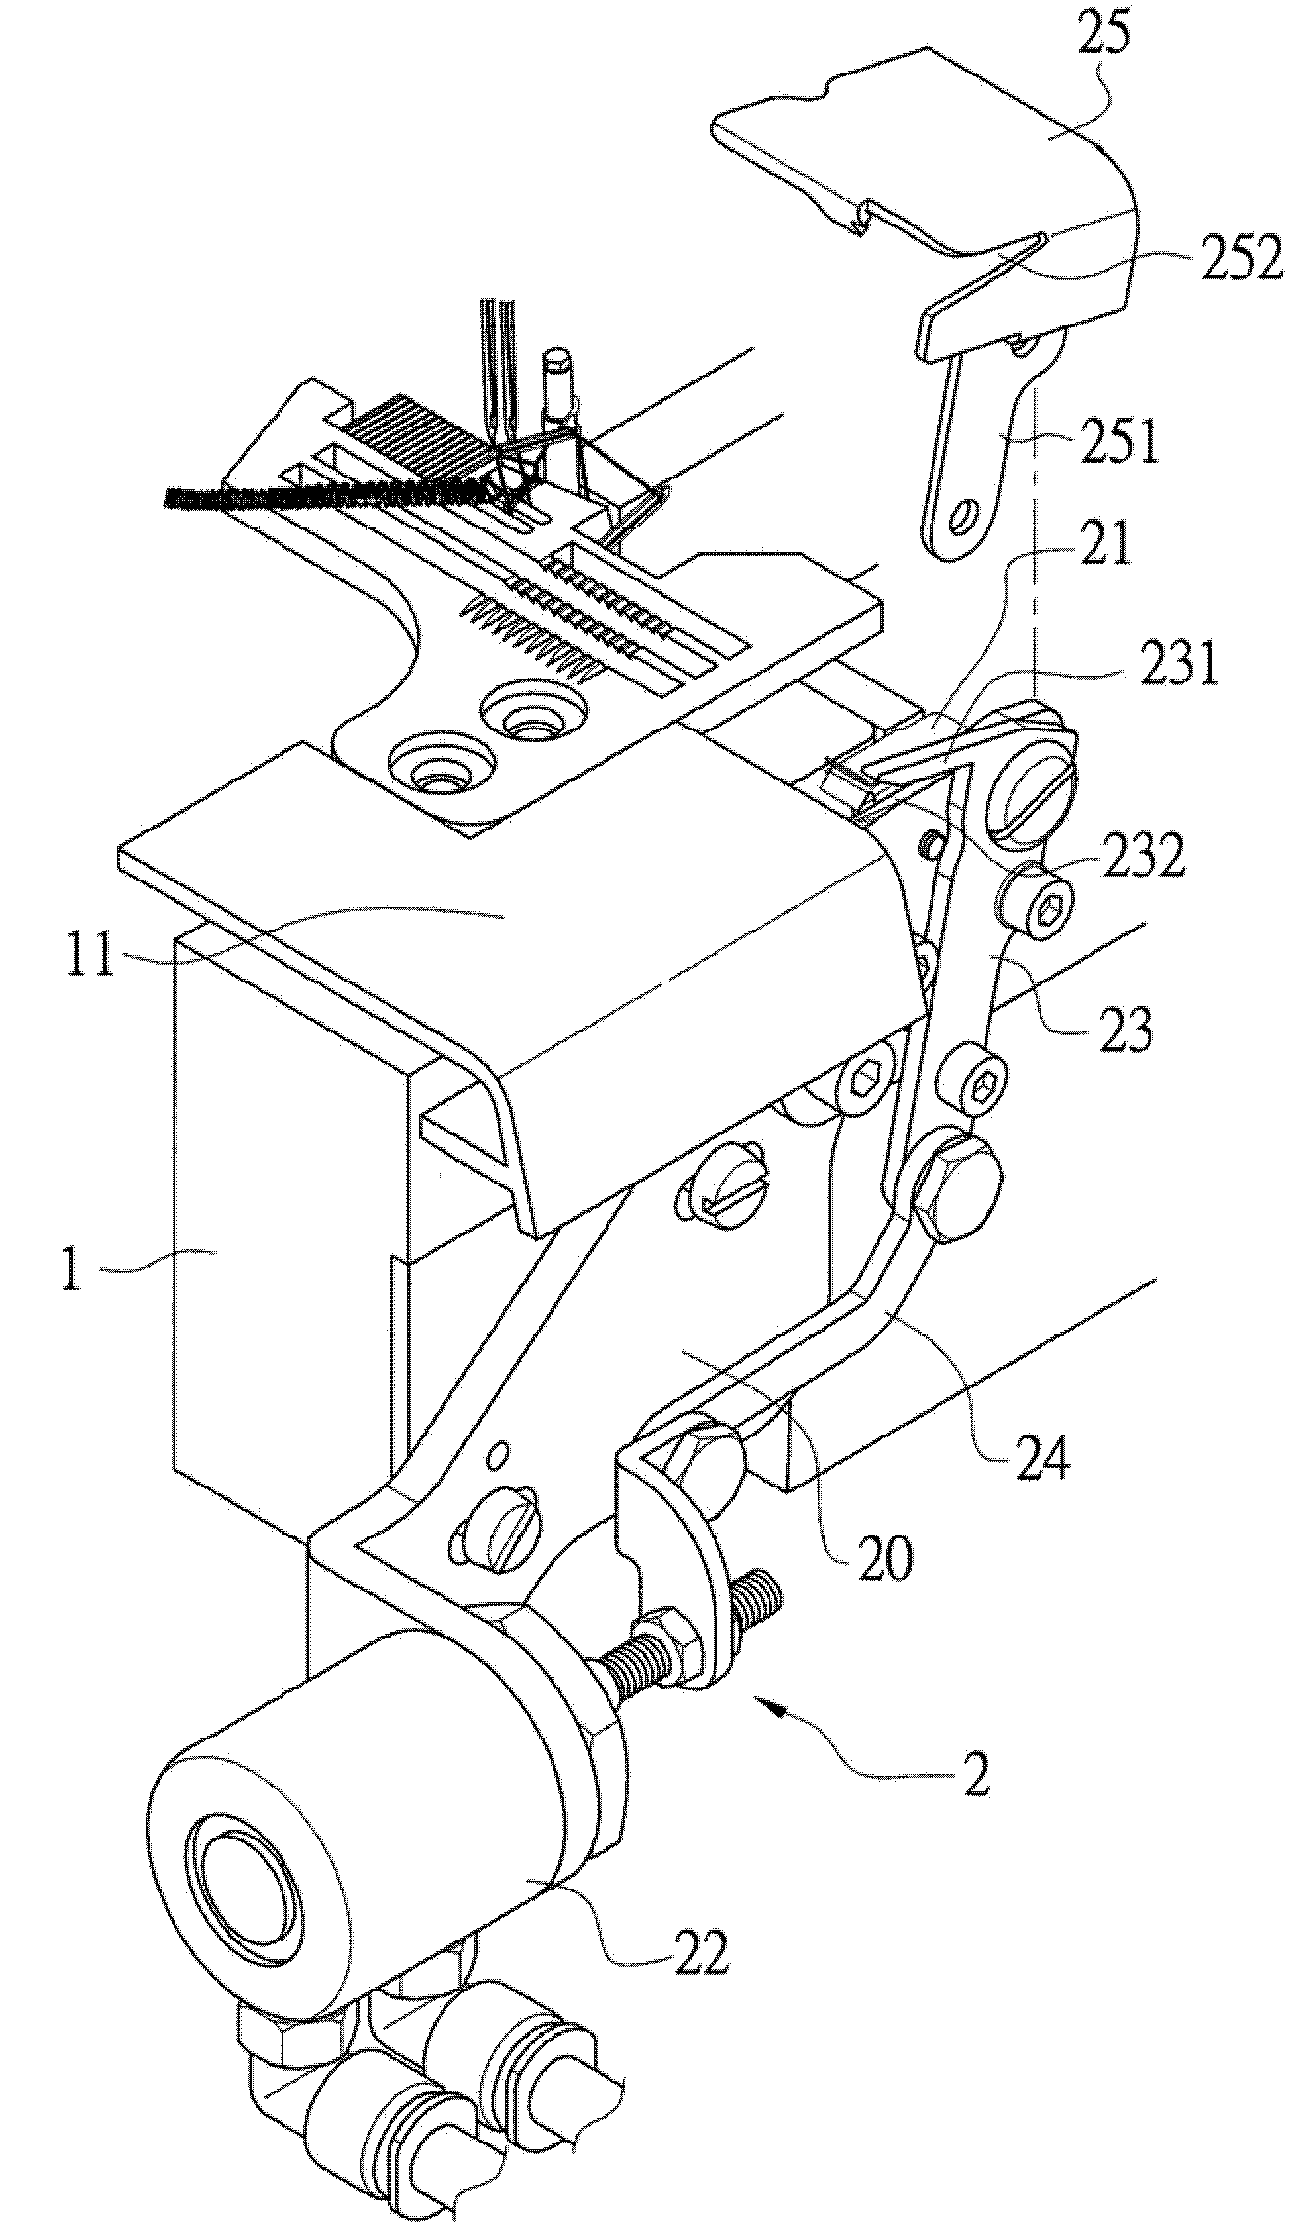 Stitch pressing and cutting device of overlock stitching machine